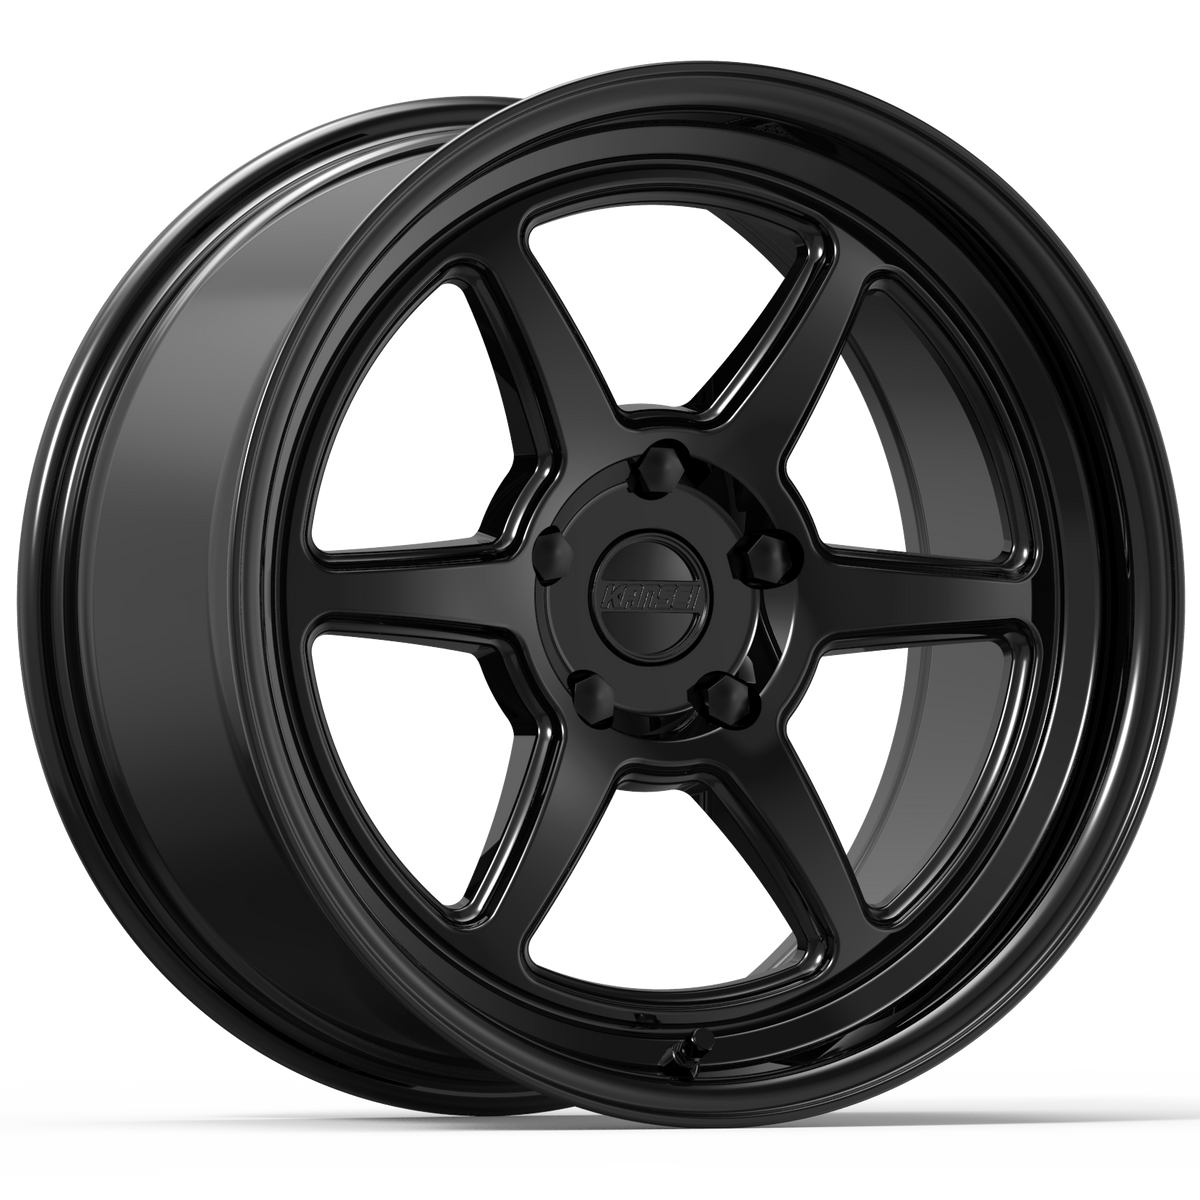 K14B ROKU Wheel, Size: 18" x 9.50", Bolt Pattern: 5 x 110 mm, Backspace: 6.12" [Finish: Gloss Black]